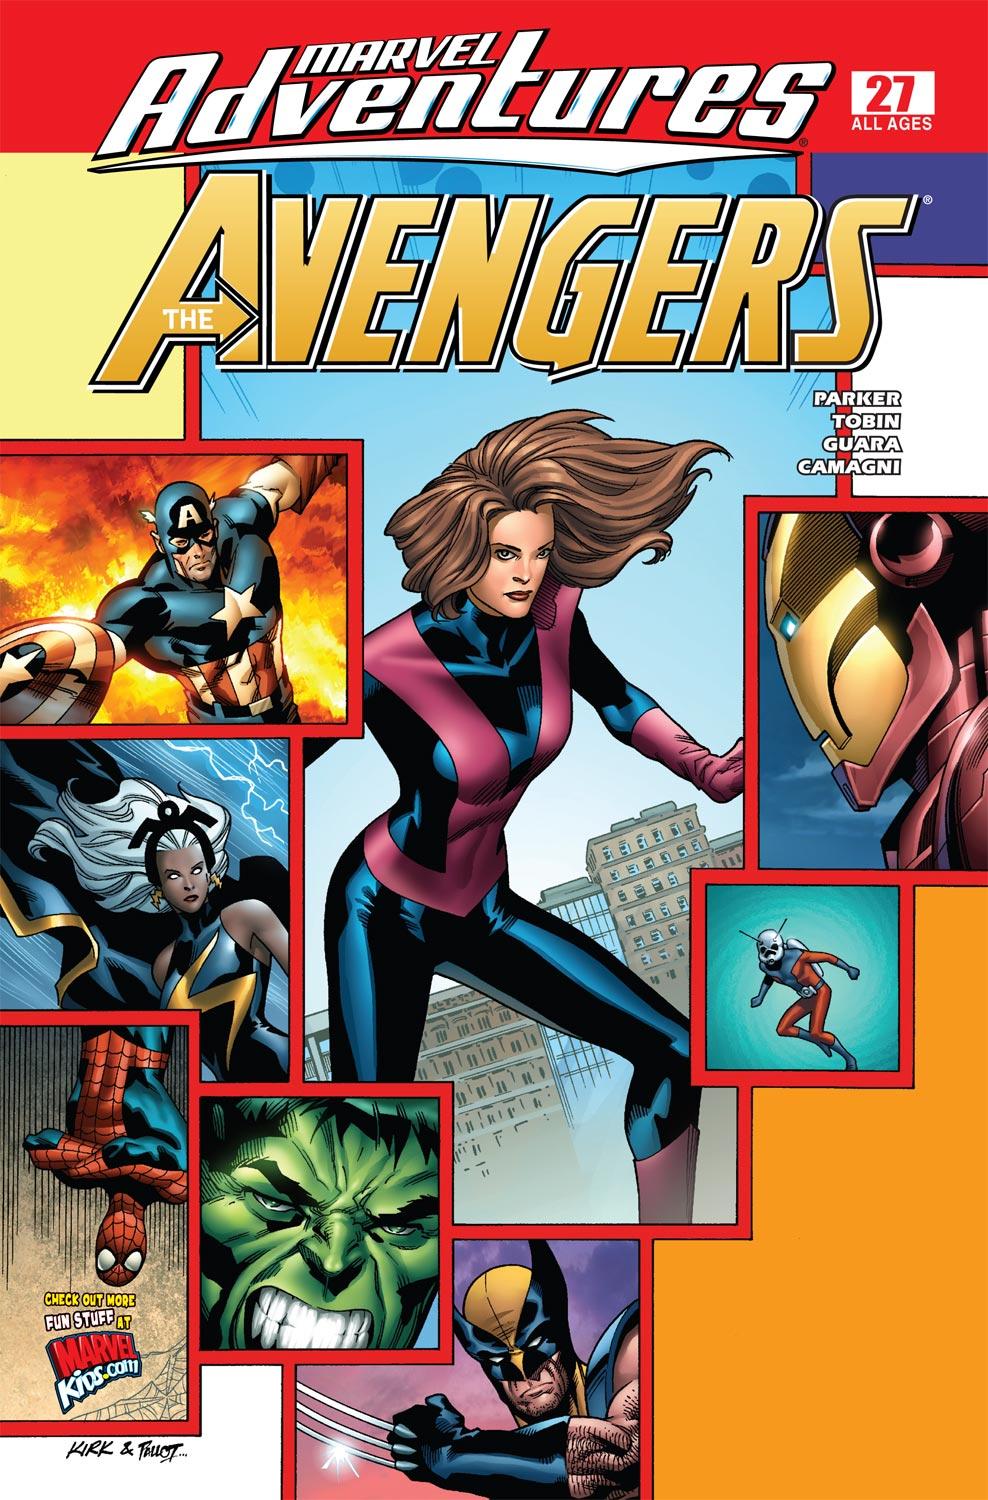 Marvel Adventures the Avengers (2006) #27